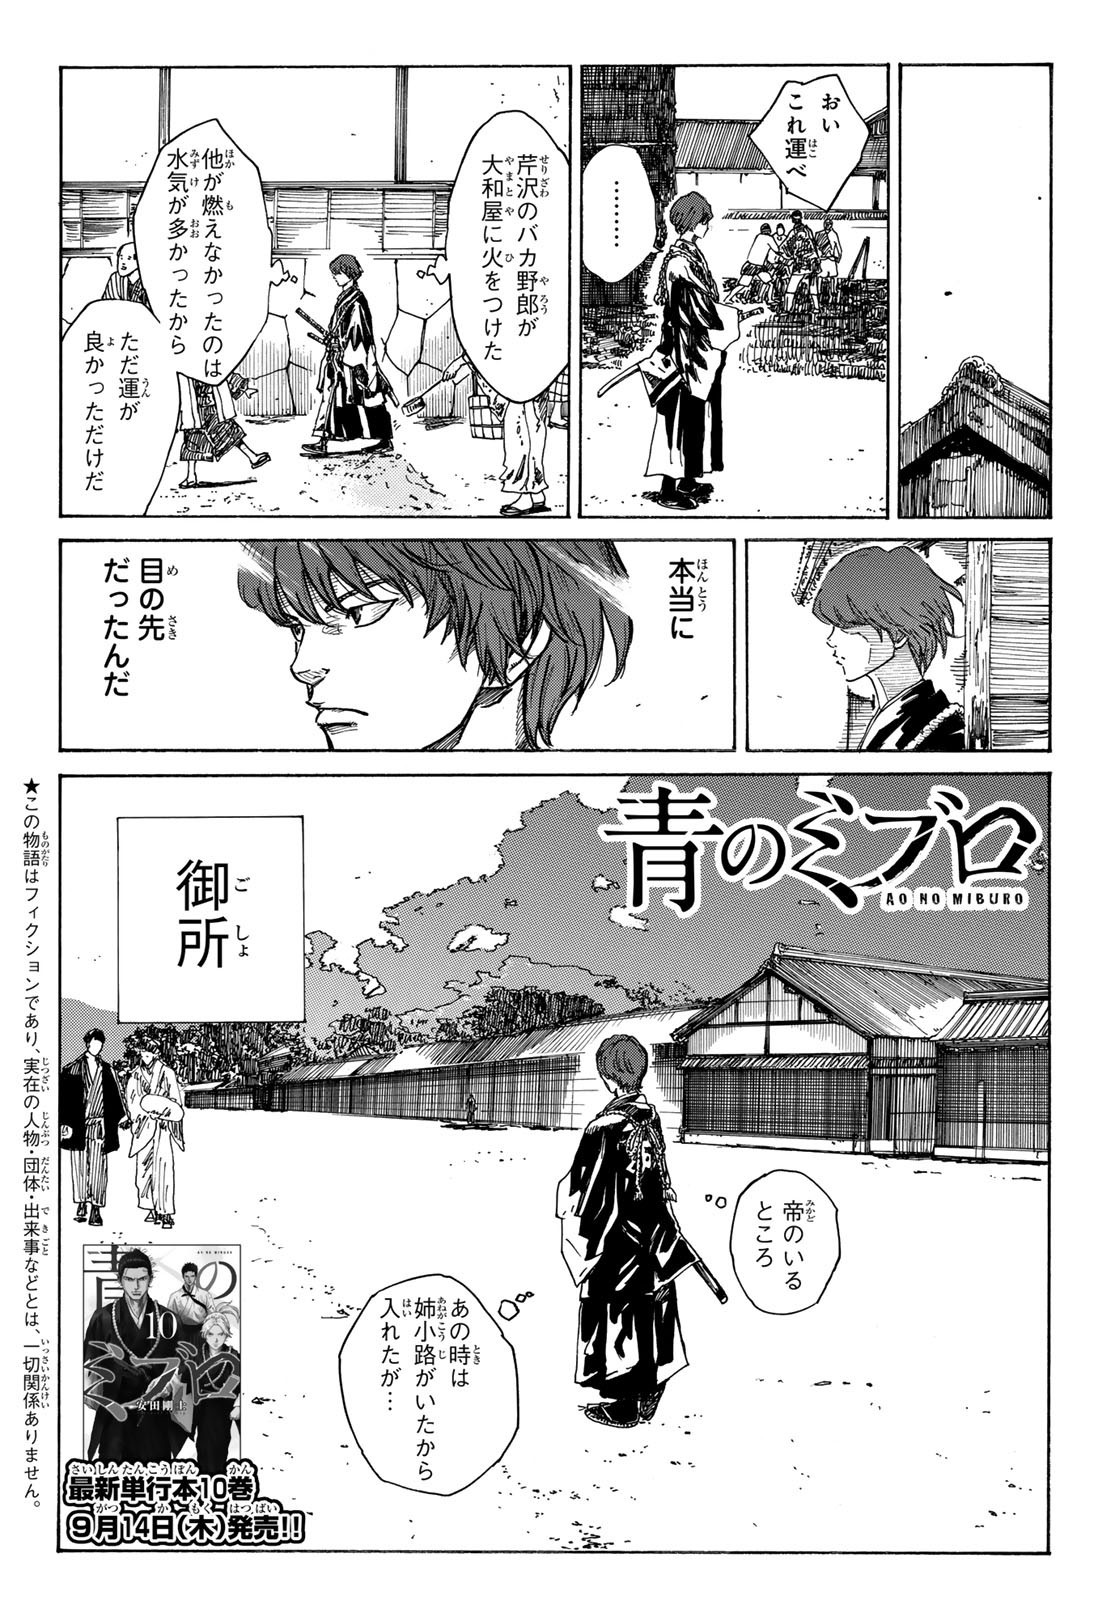 Ao no Miburo - Chapter 092 - Page 2